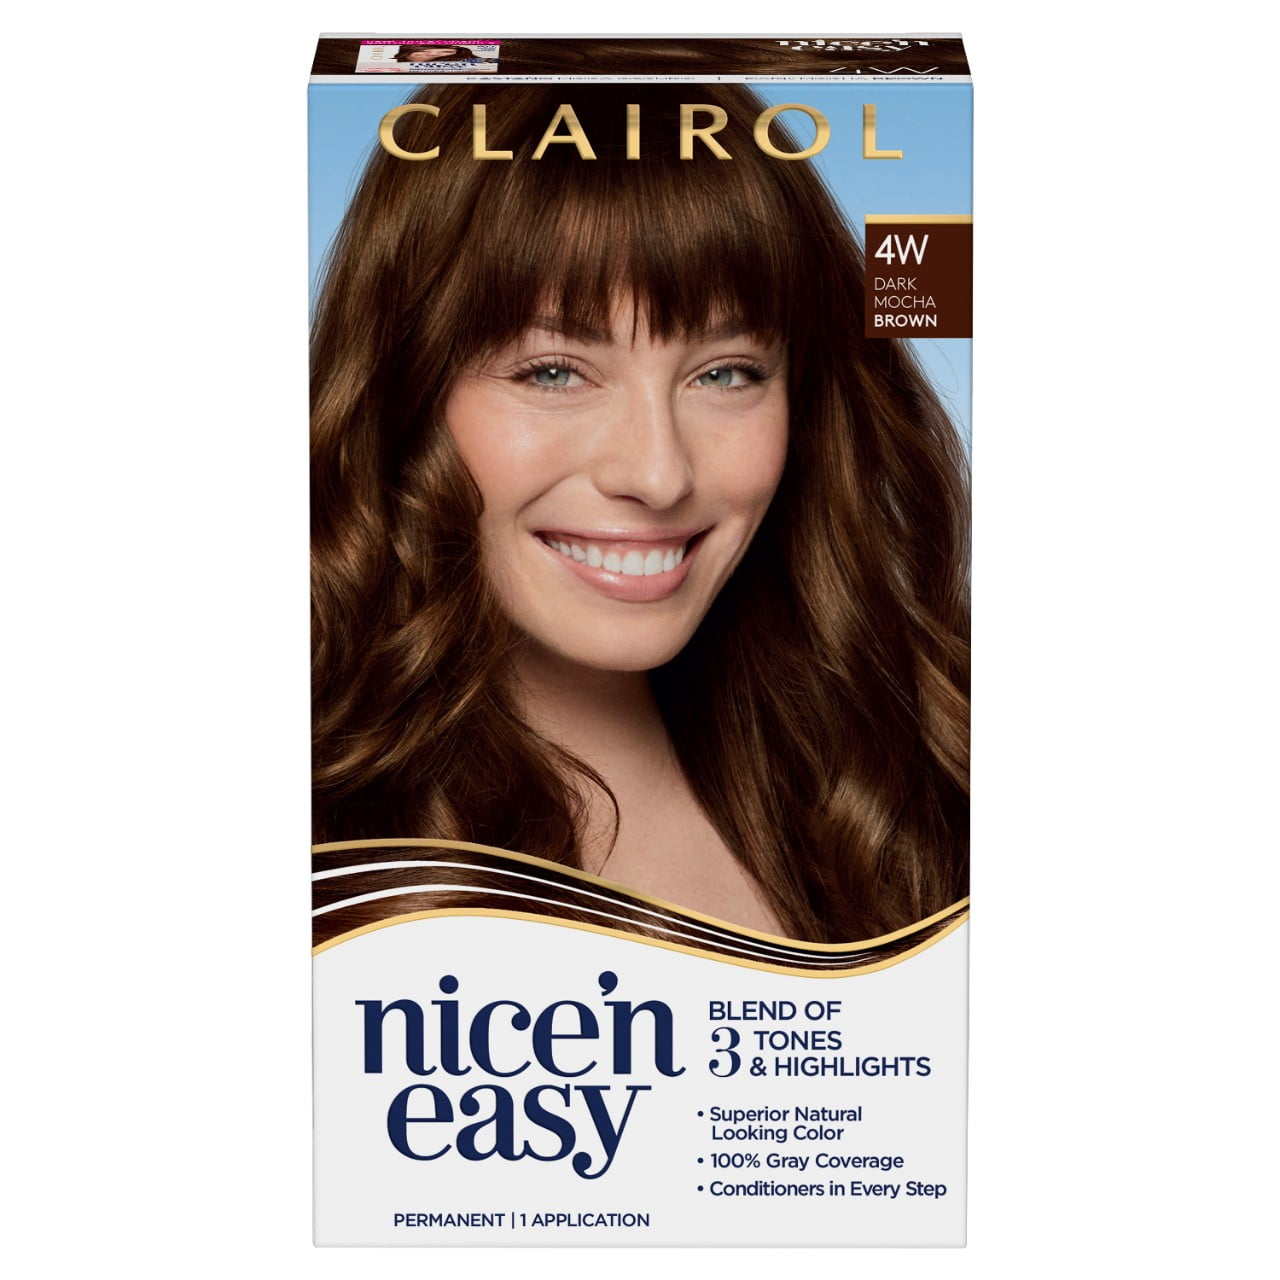 Clairol Nice'n Easy Permanent Hair Color Creme, 4W Dark Mocha Brown, 1  Application, Hair Dye - Walmart.com